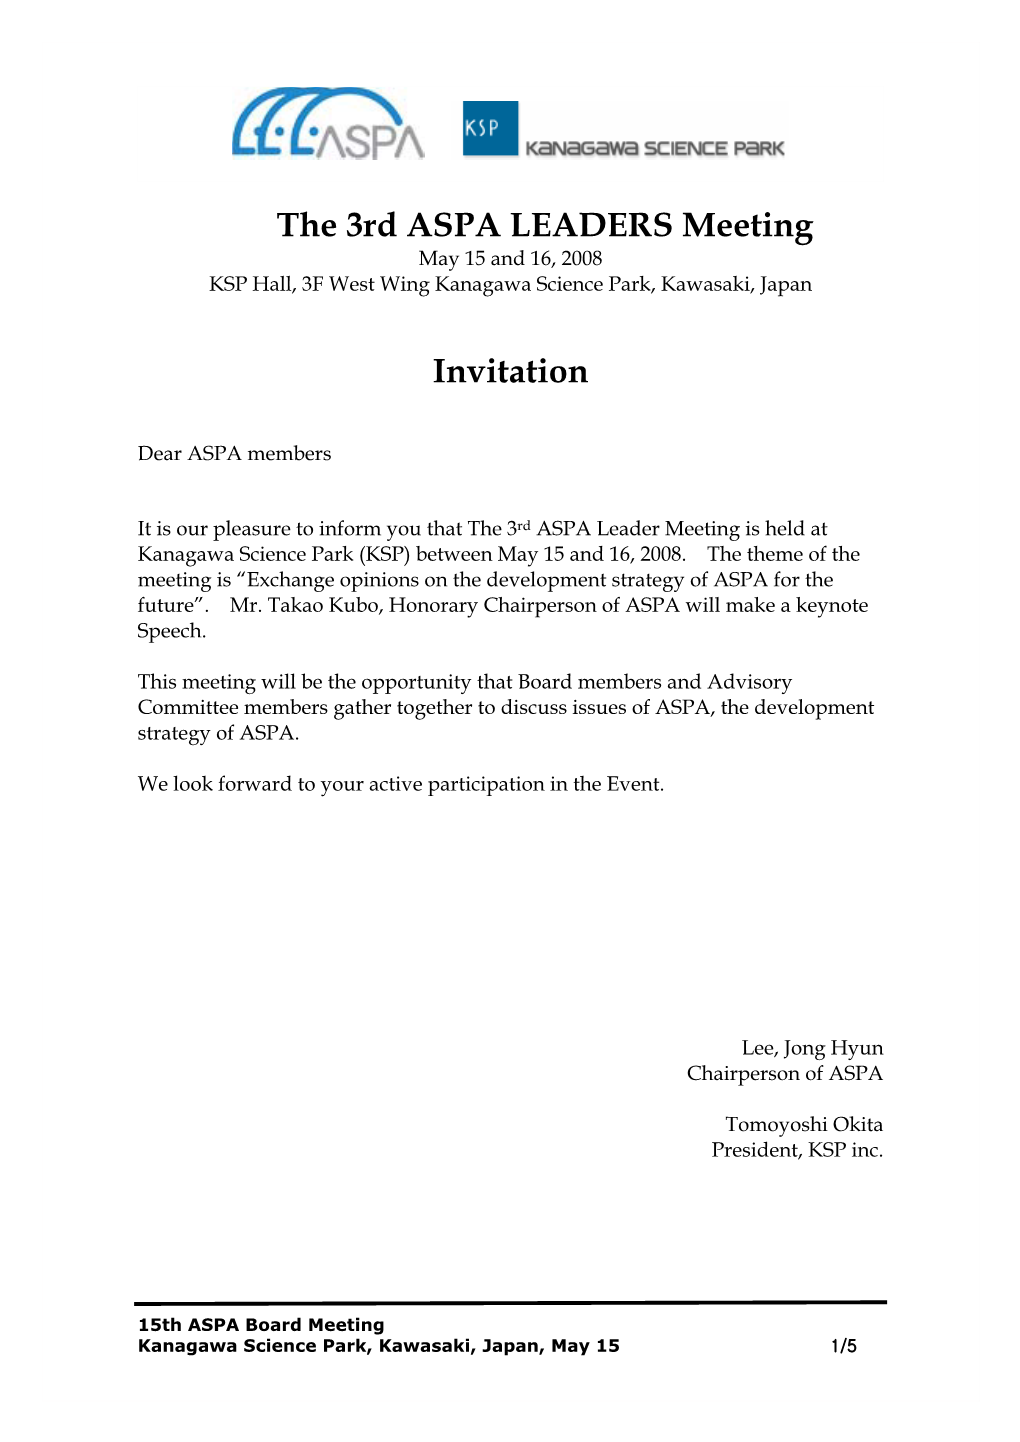 The 3Rd ASPA LEADERS Meeting Invitation